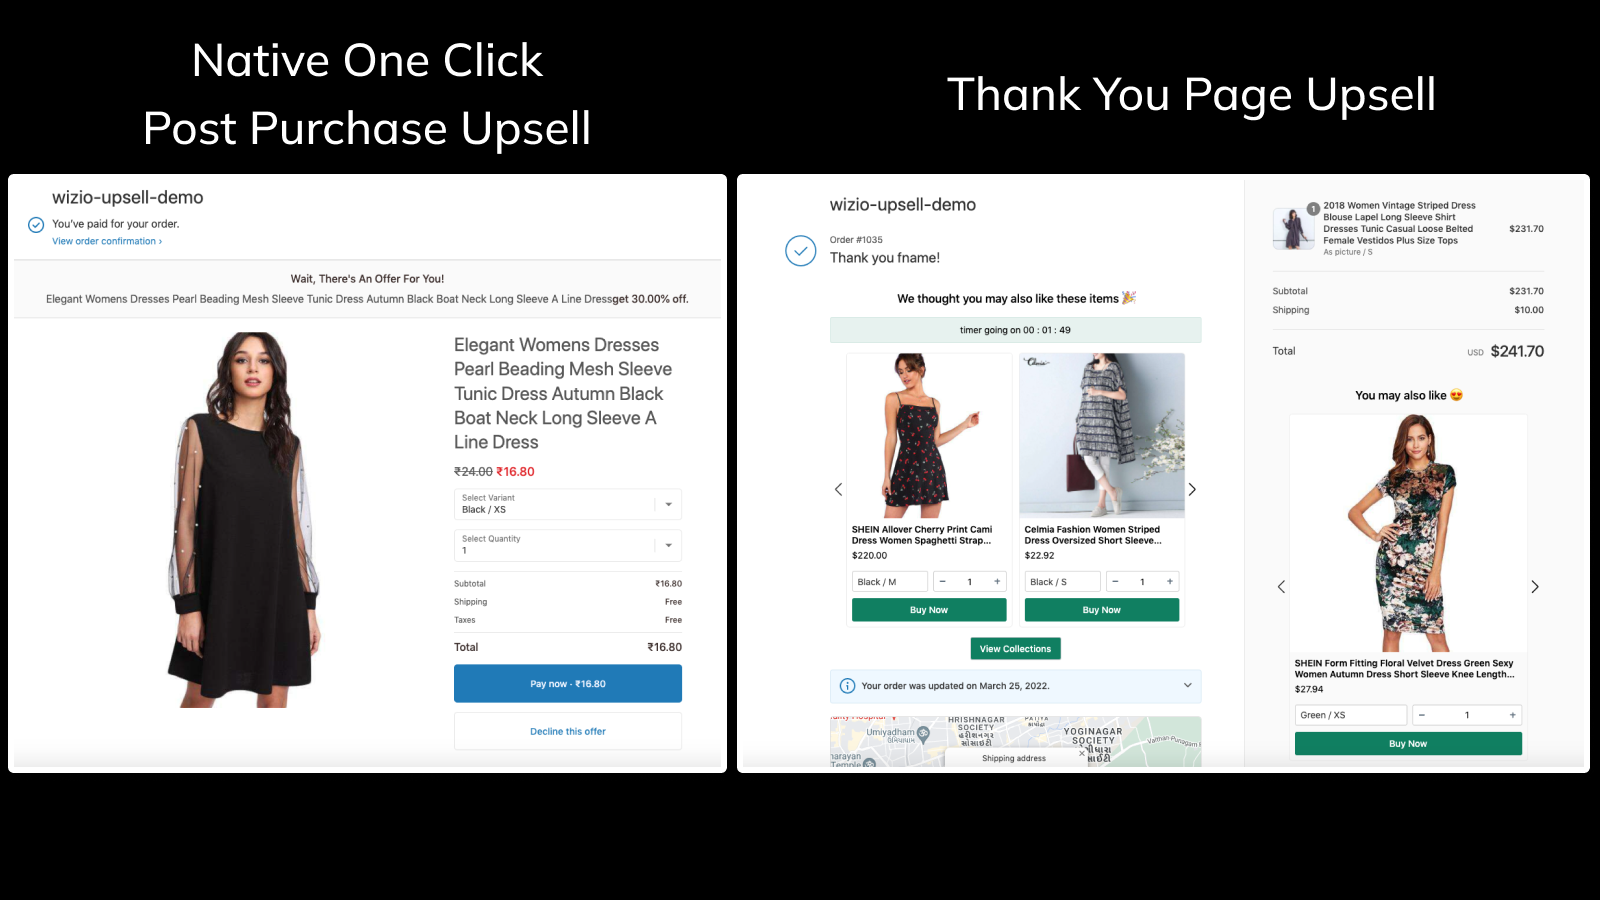 indbygget one click post purchase og tak side upsell